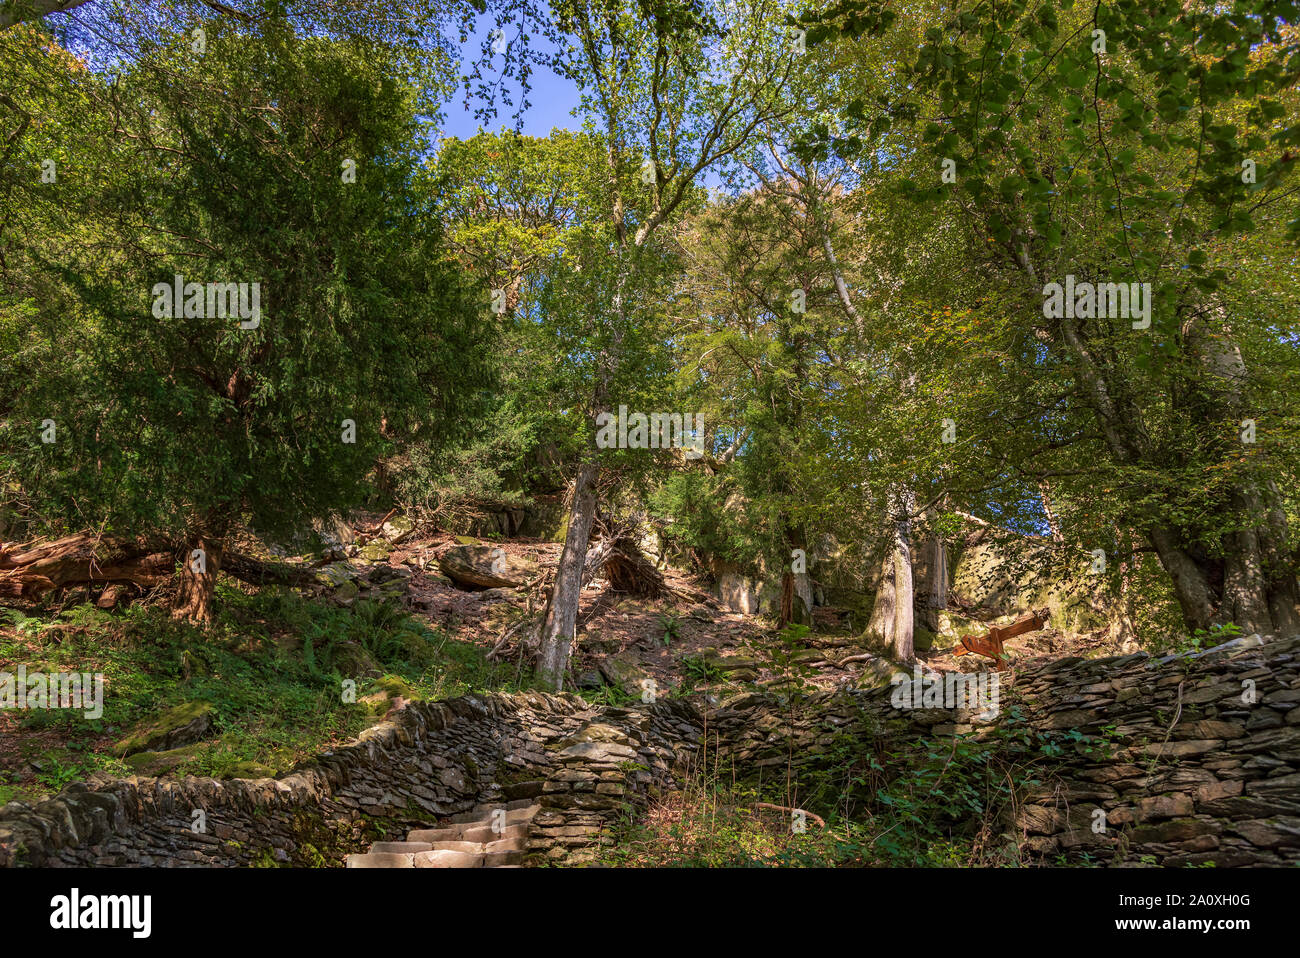 Shady woodland scene with rocky wall. Stock Photo